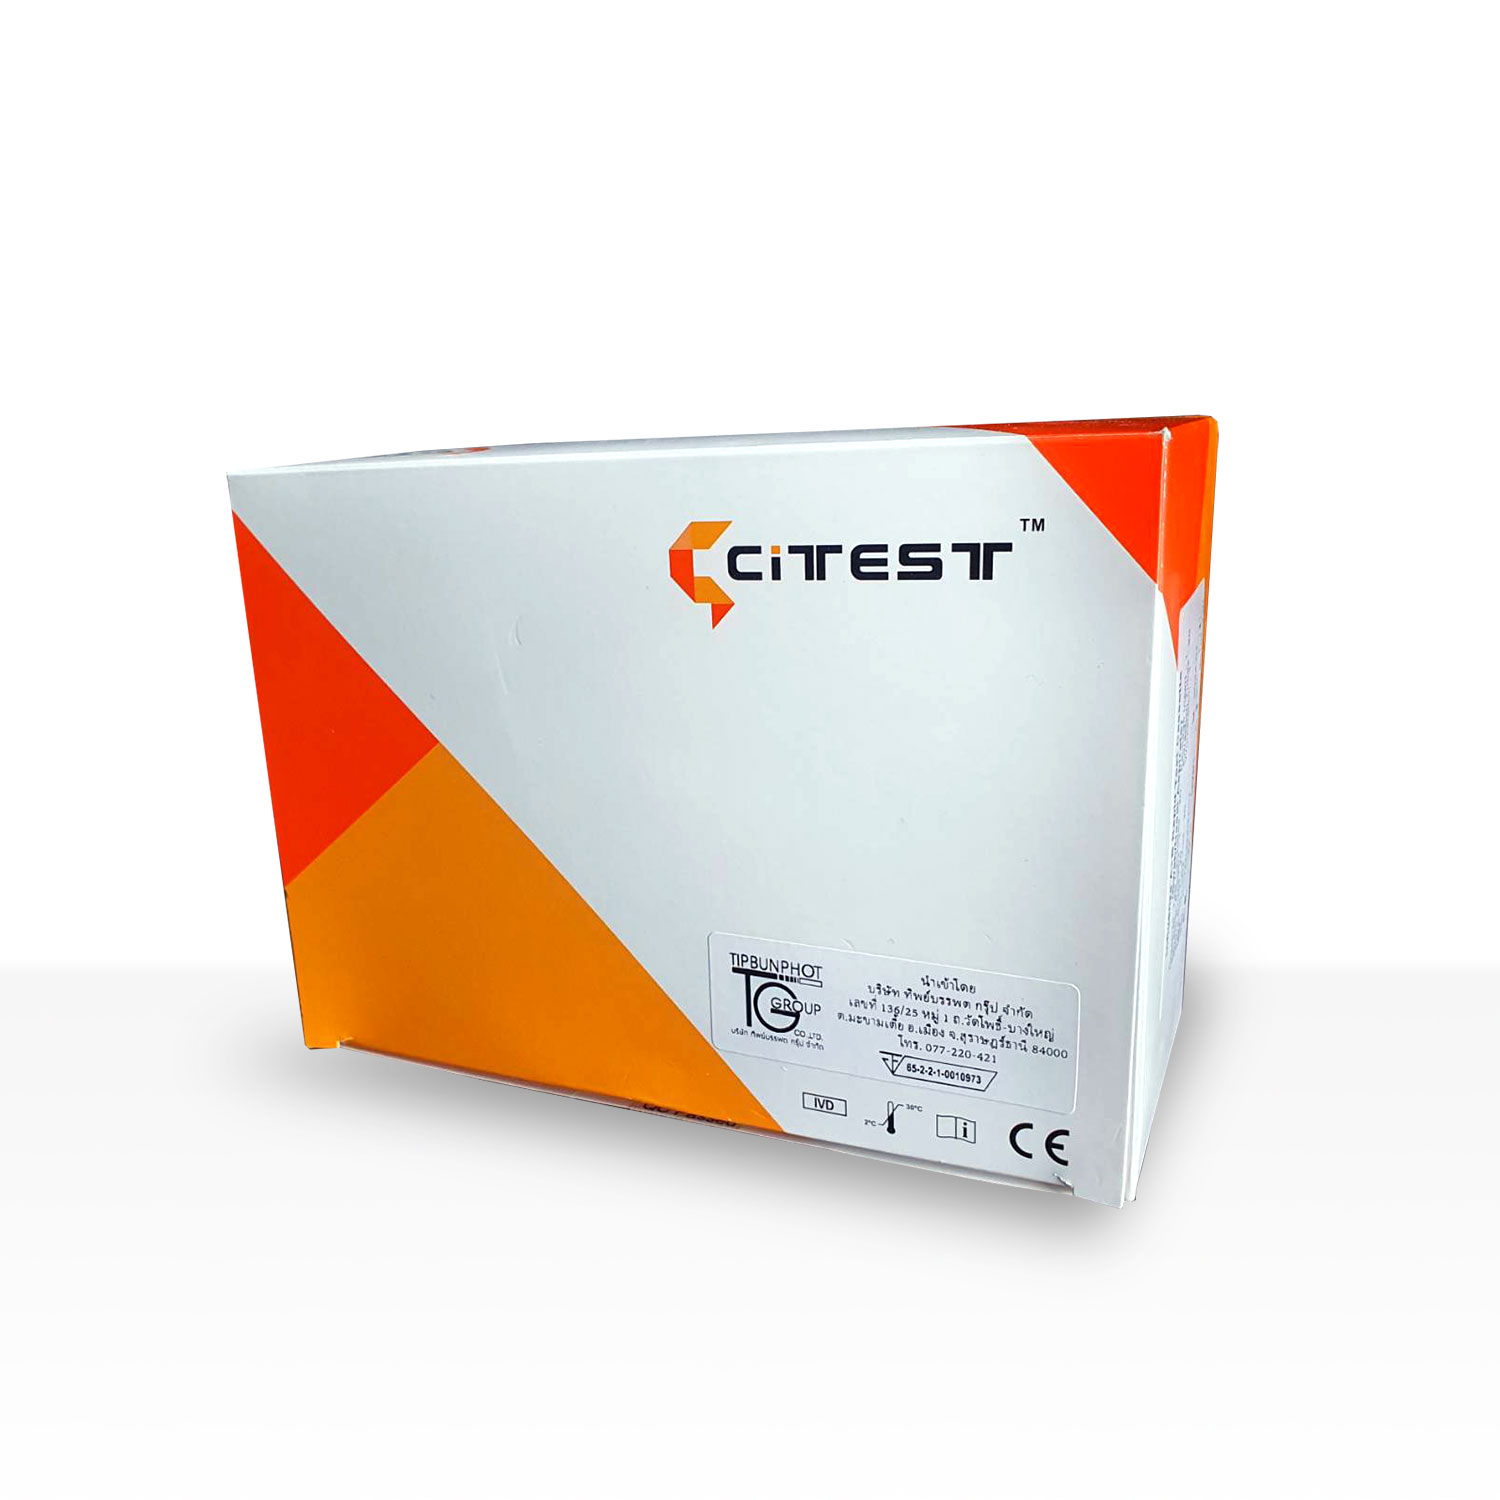 CITEST HBsAg Rapid Test (Cassette)